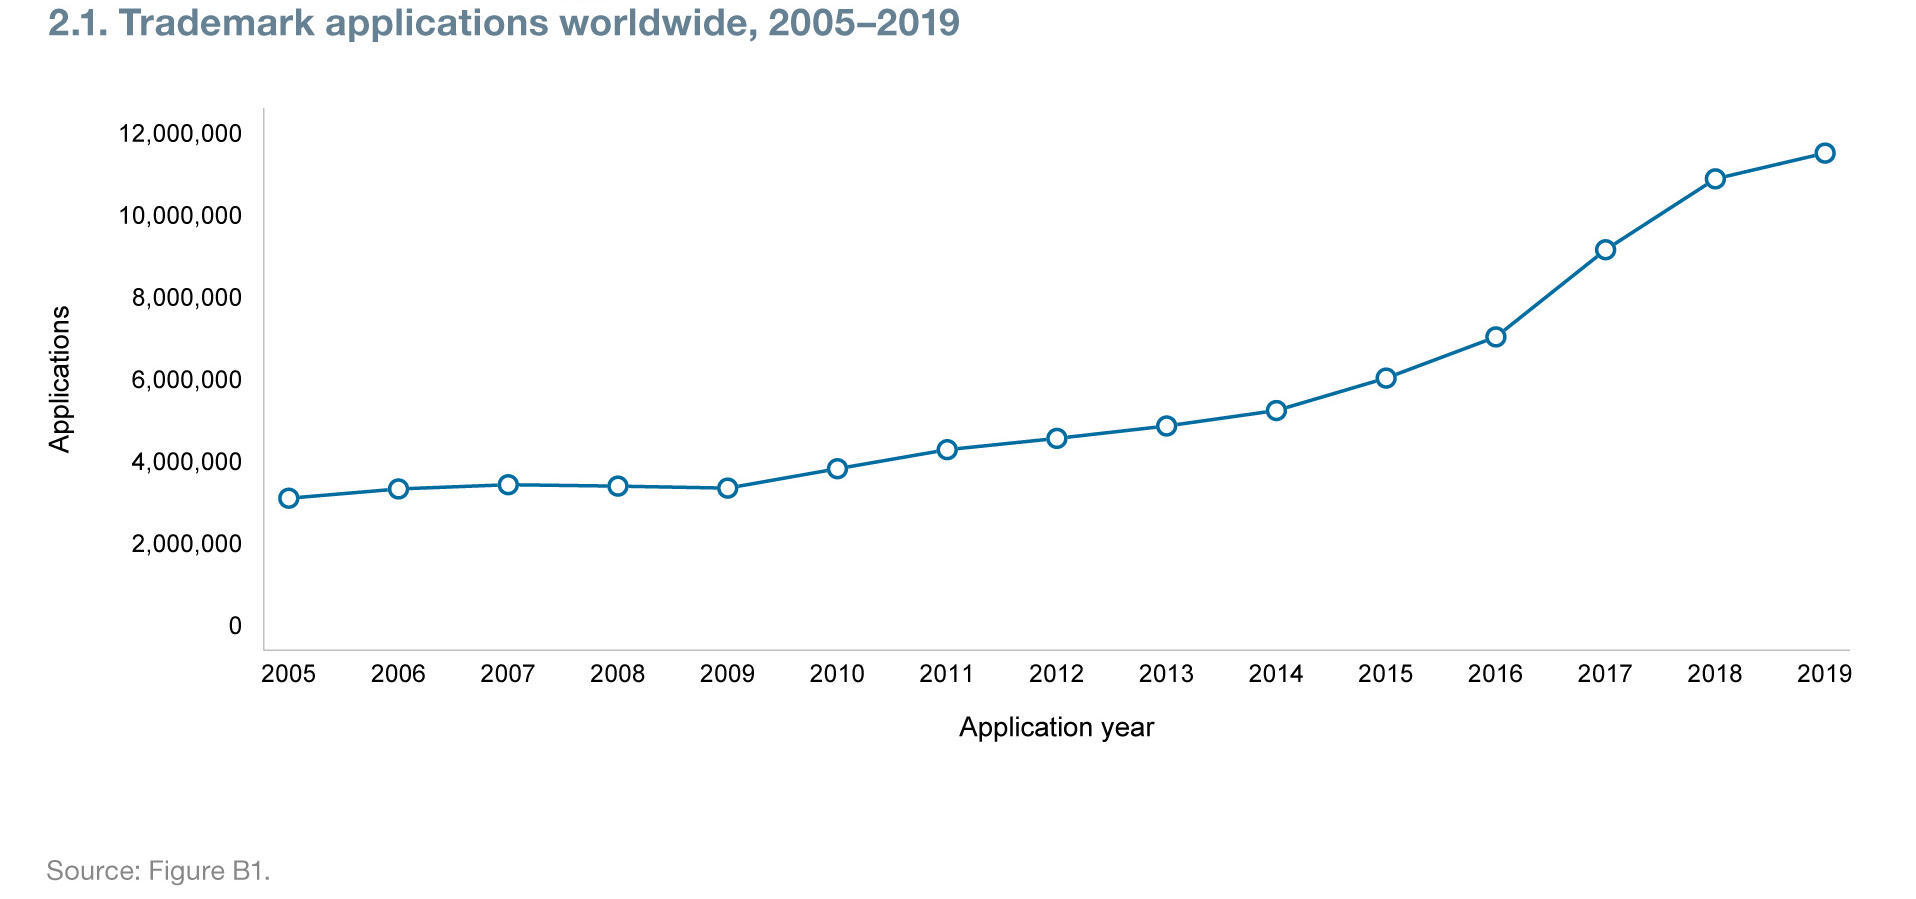 Trademark applications worldwide, 2005-2019